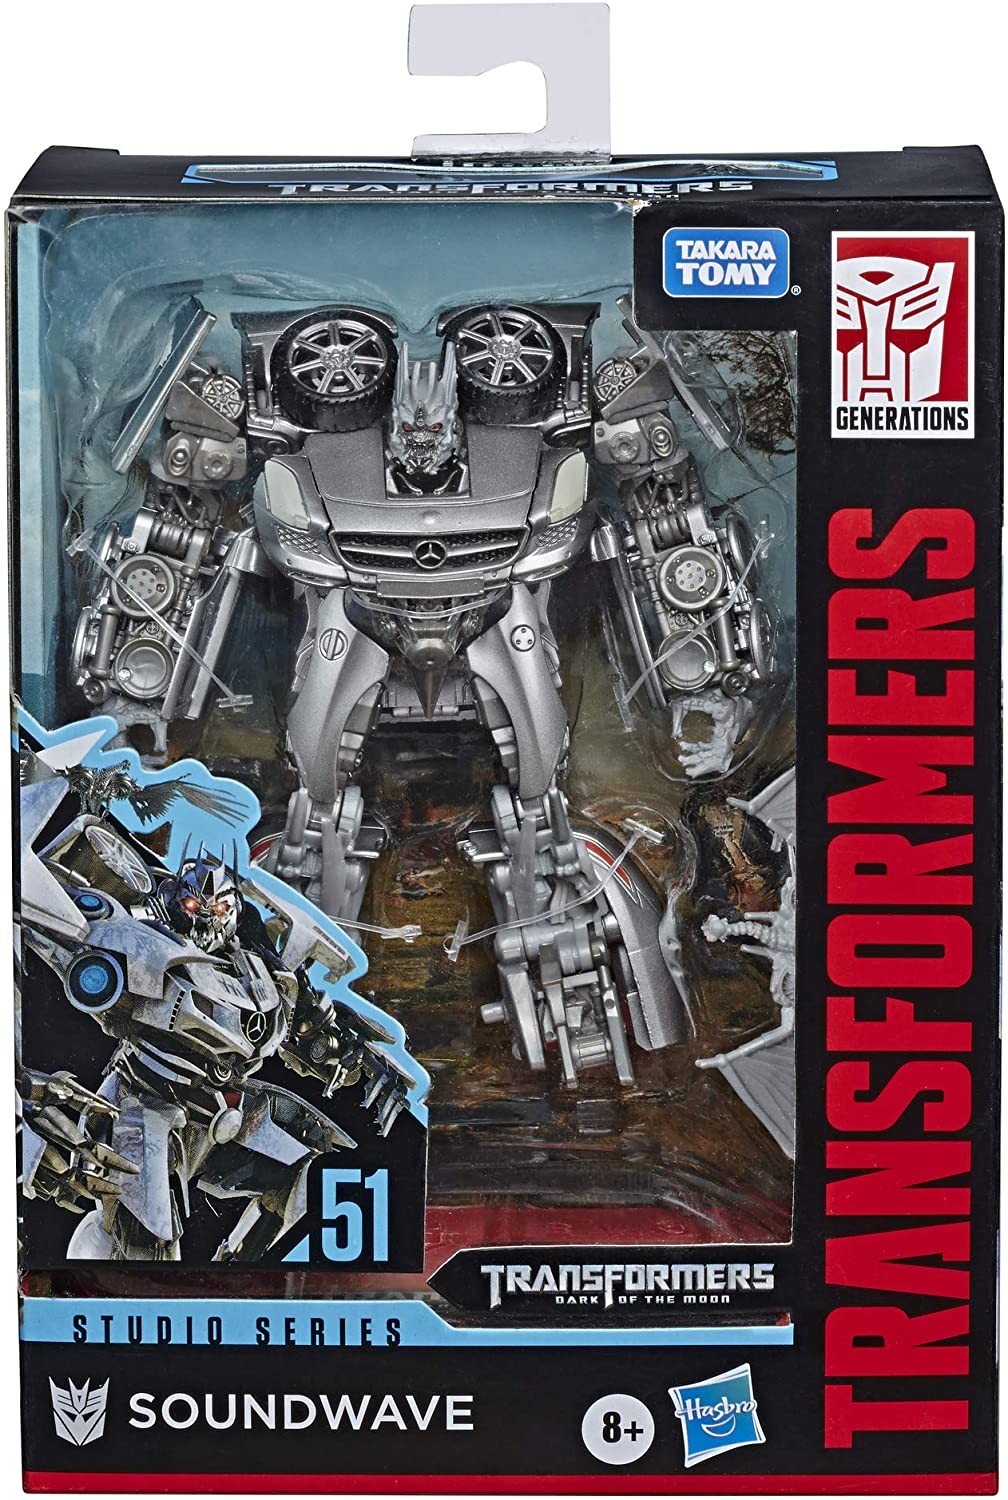 Transformers News: Transformers Studio Series Sales on Amazon.com